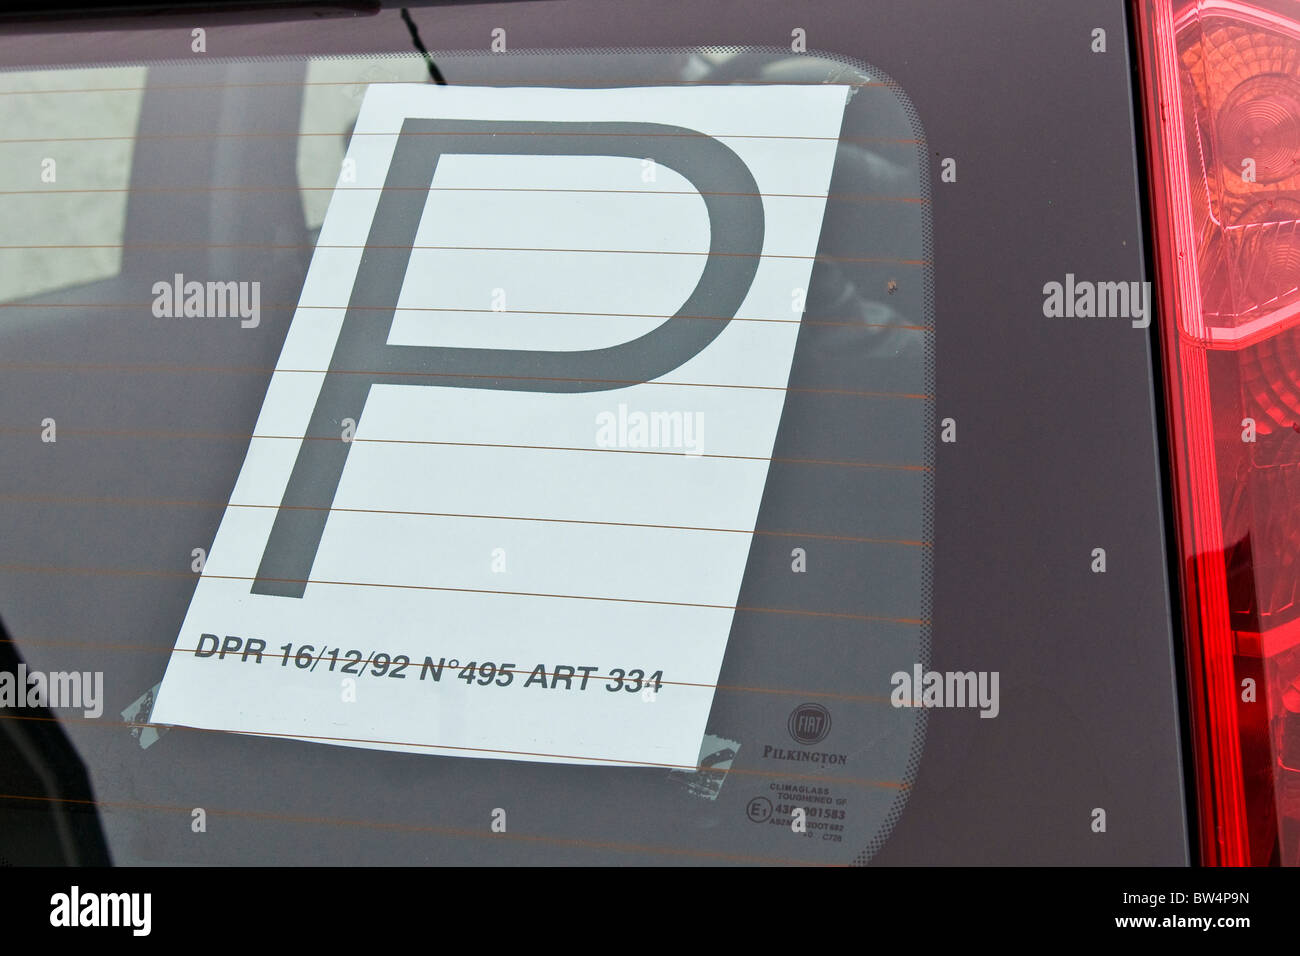 plate beginner, driving school Stock Photo - Alamy